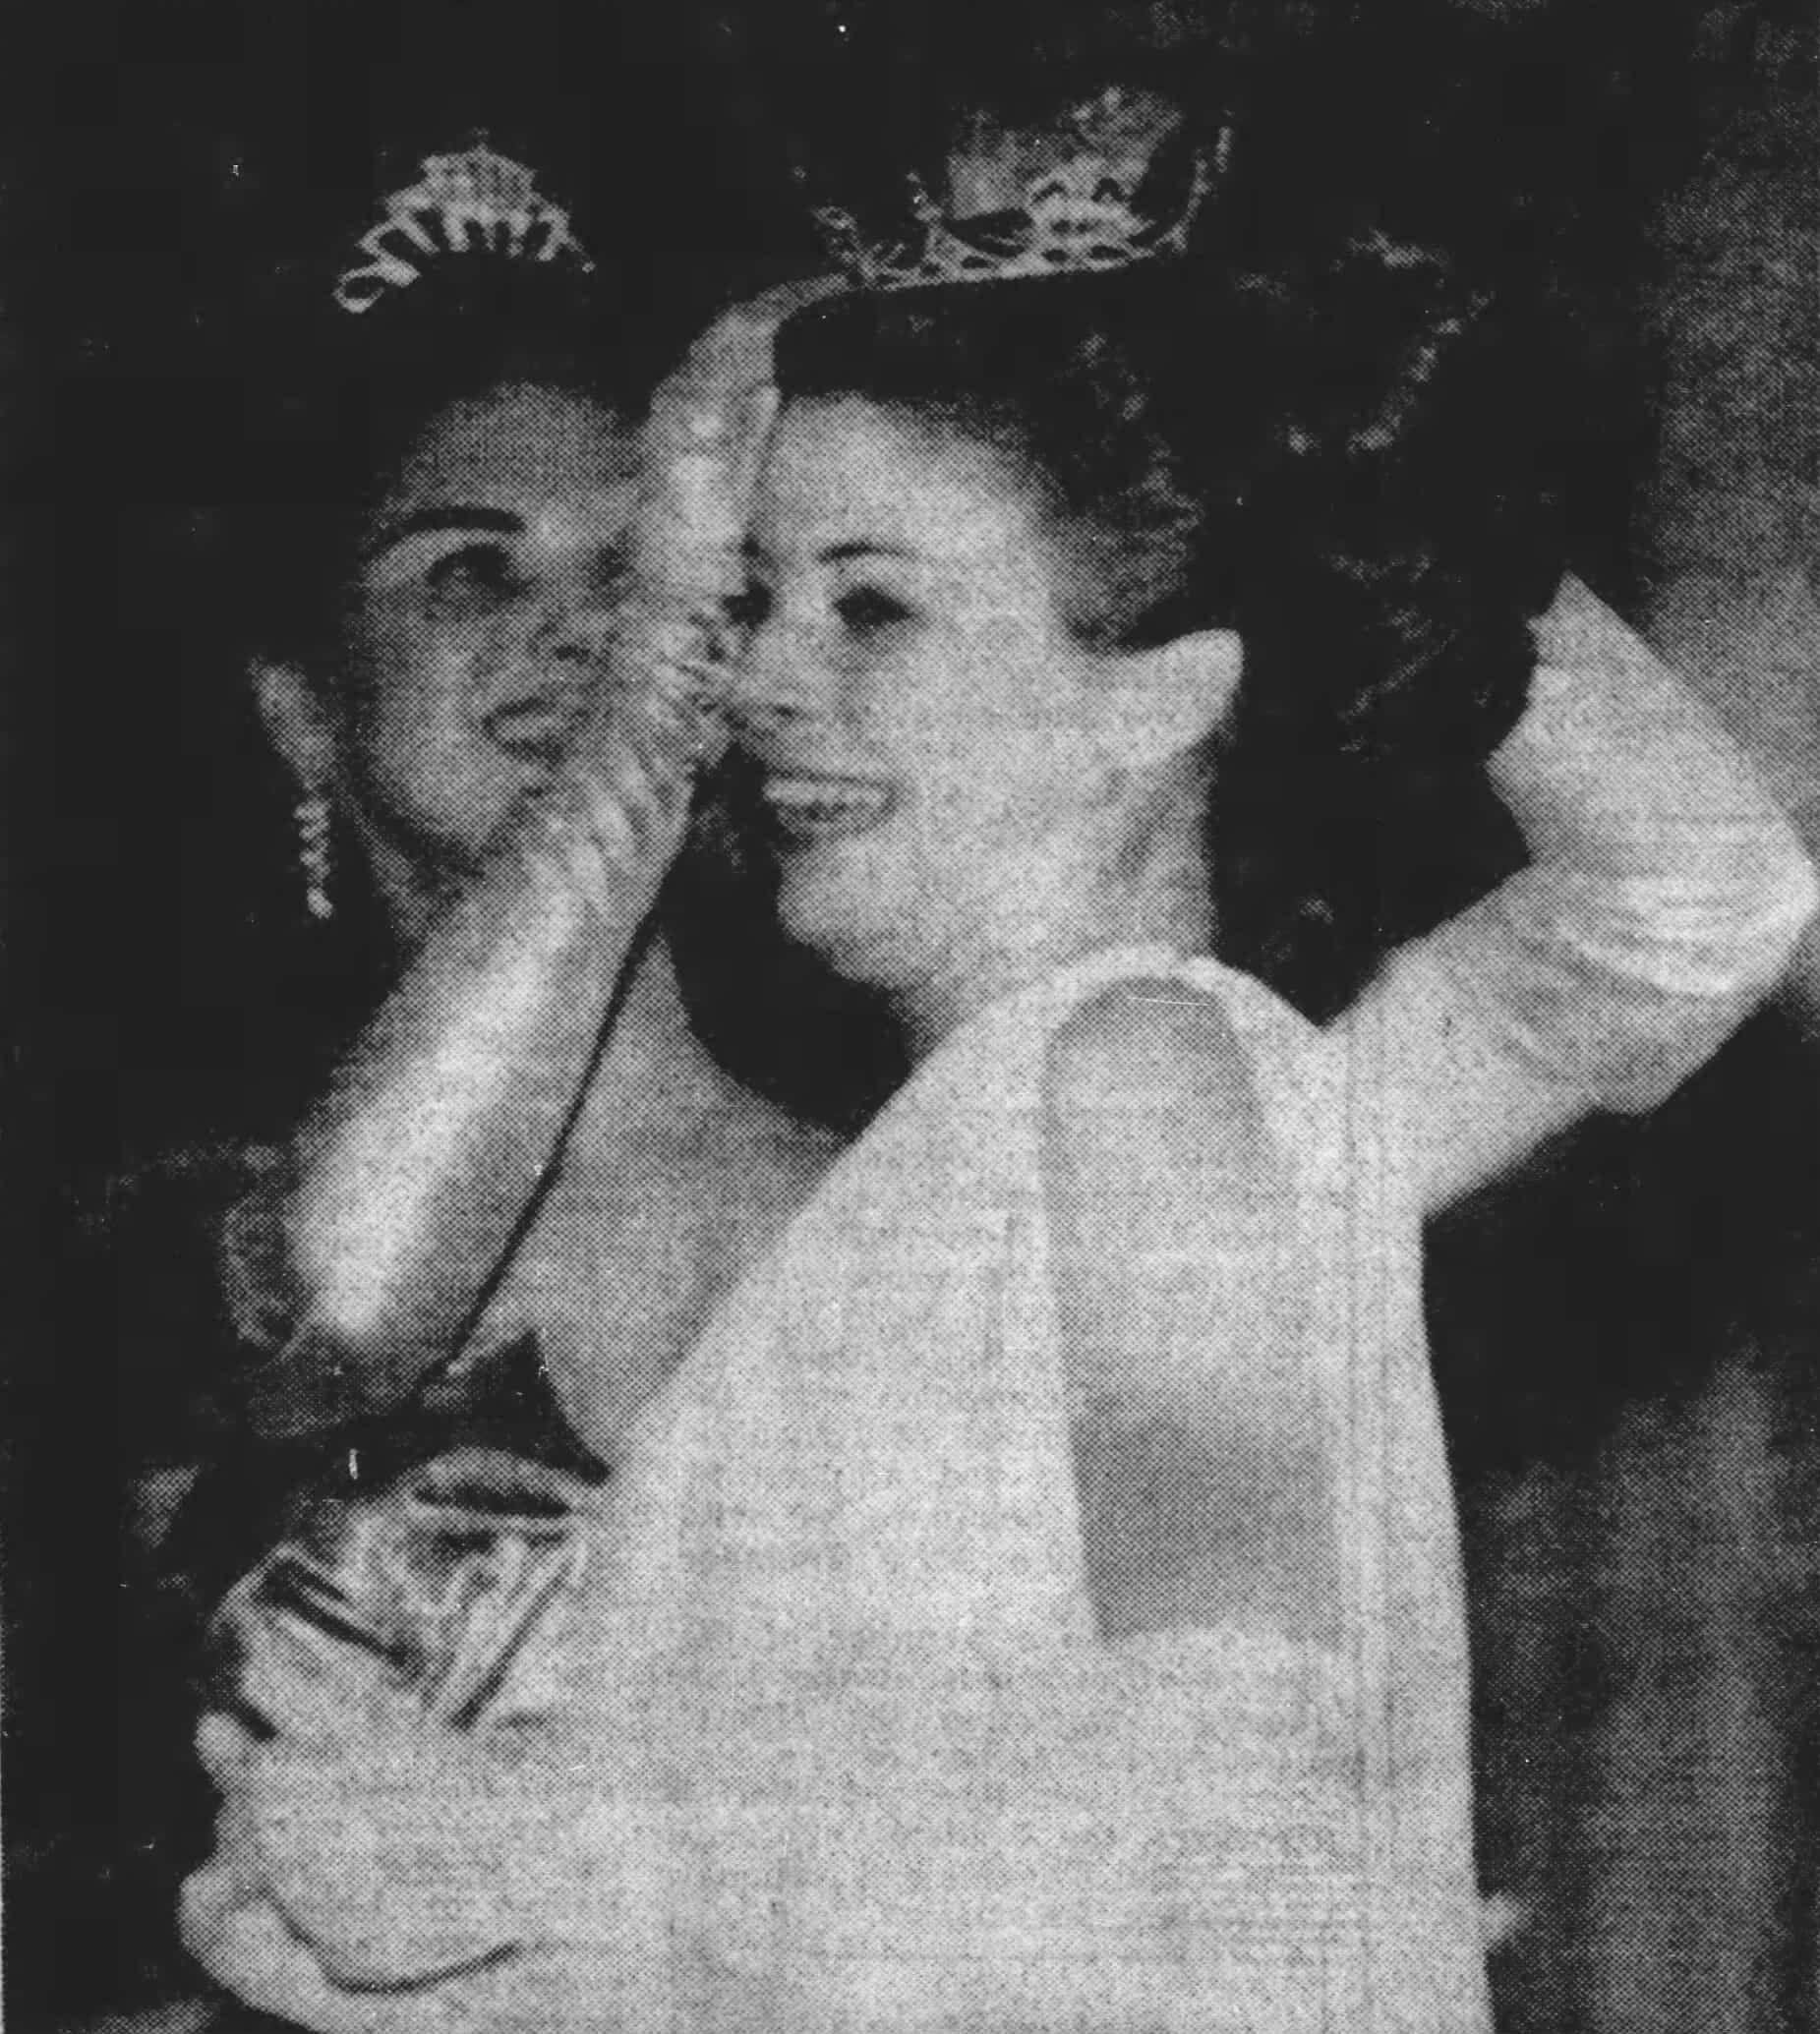 Kathy Hebert is crowned Miss Louisiana USA 1968